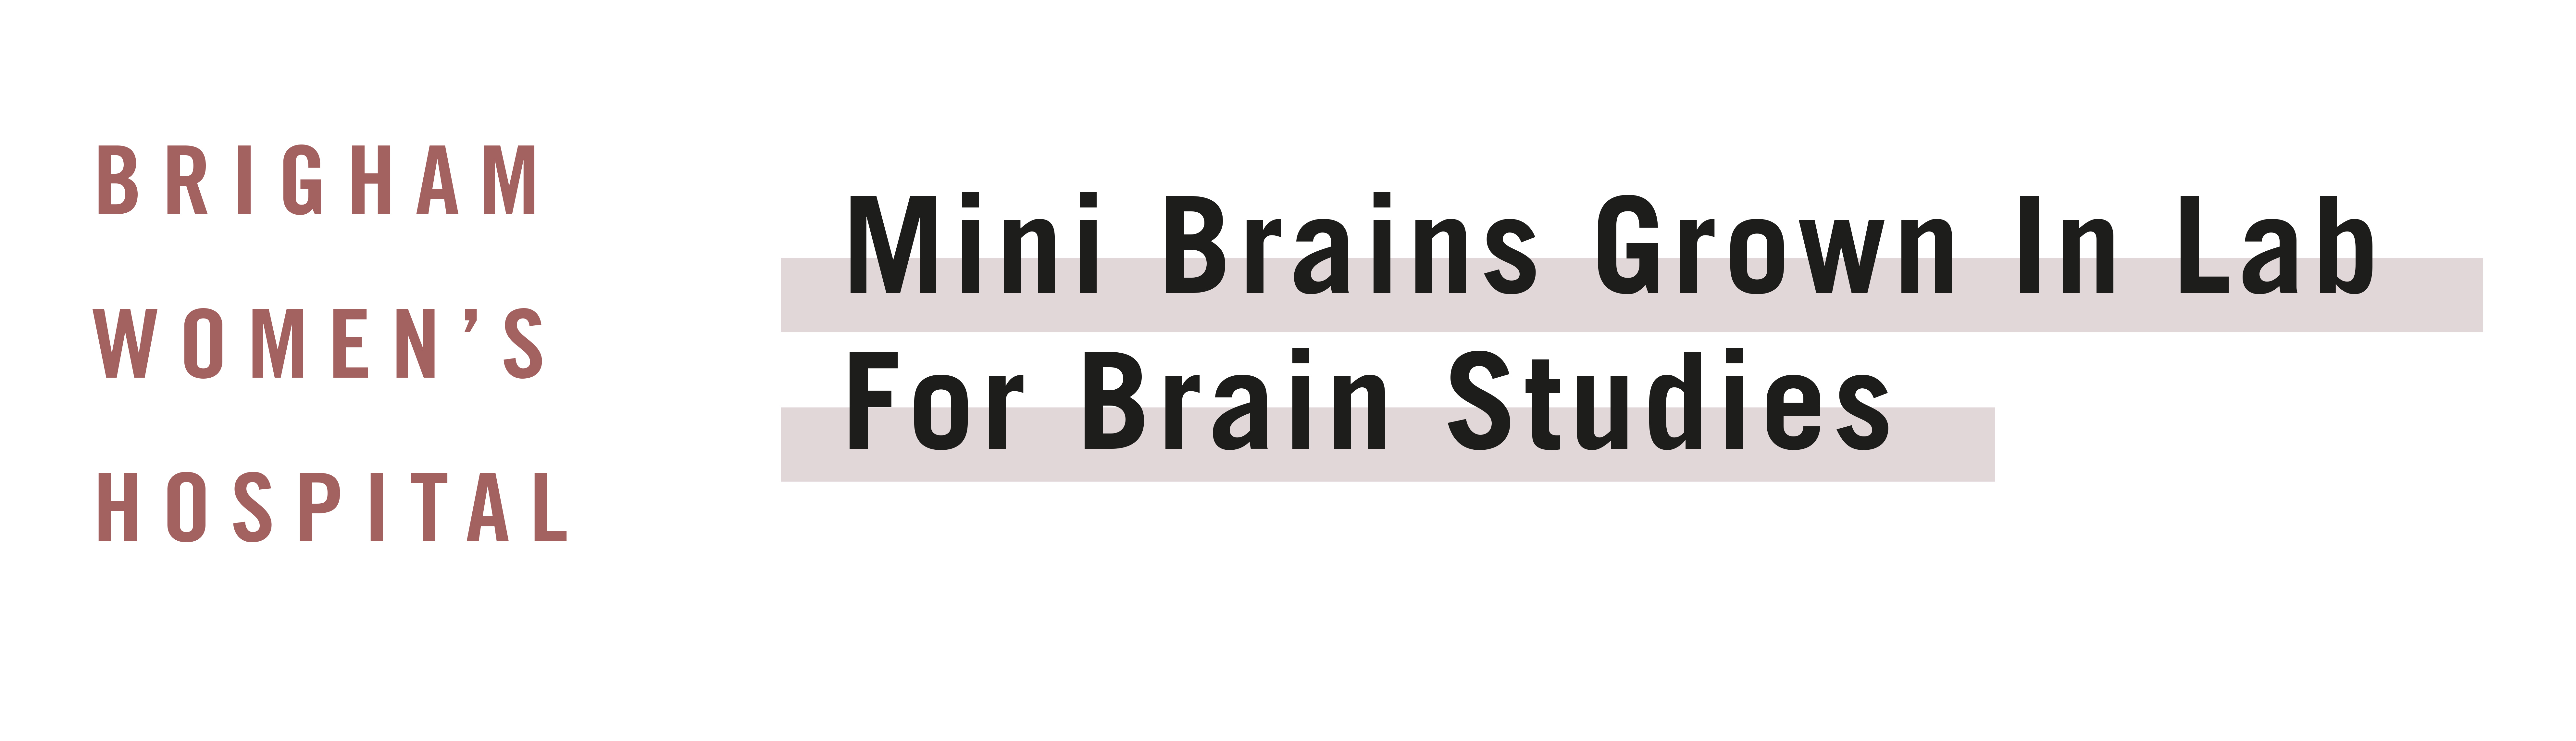 Mini-Brains